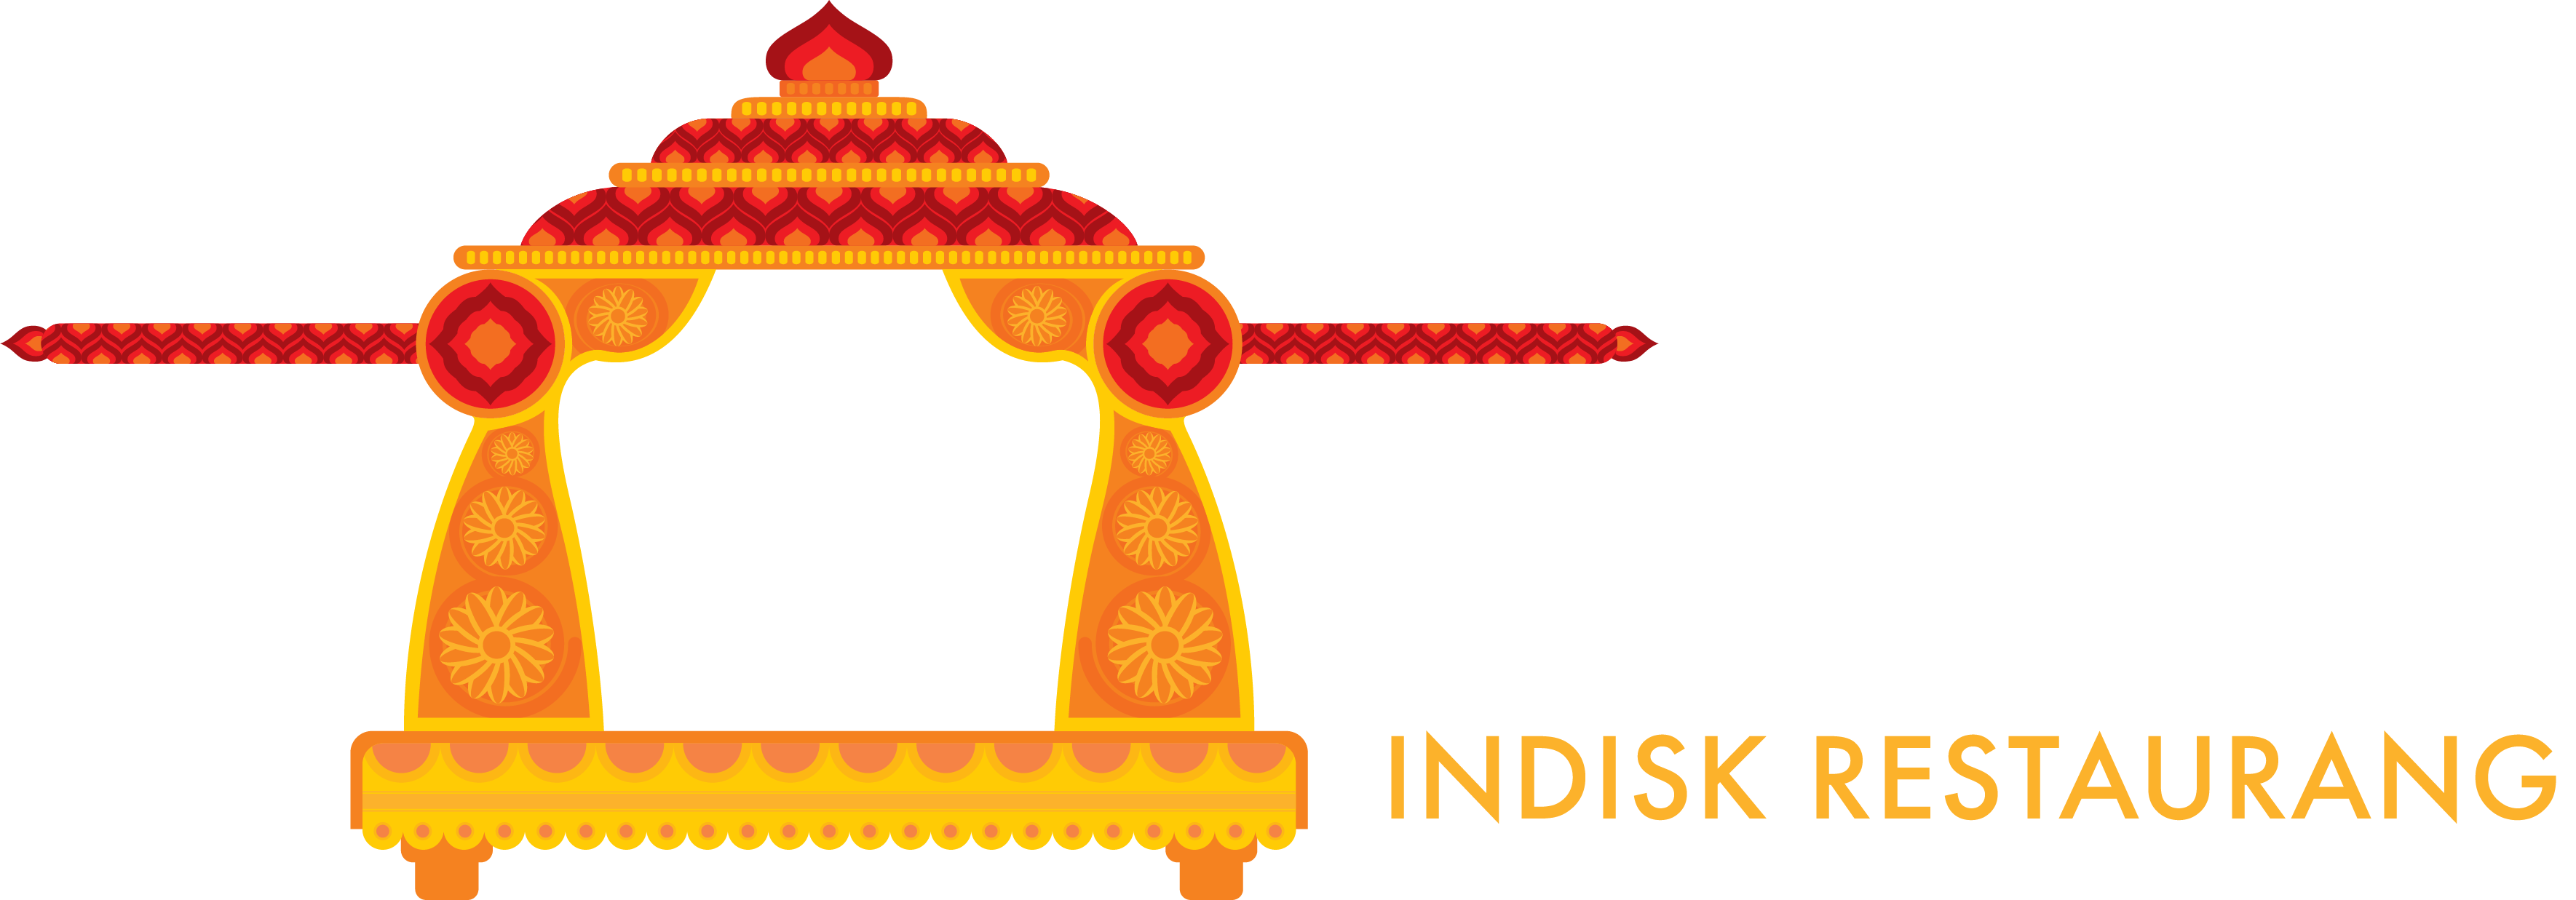 Palki - Indisk Restaurang & Pizzeria